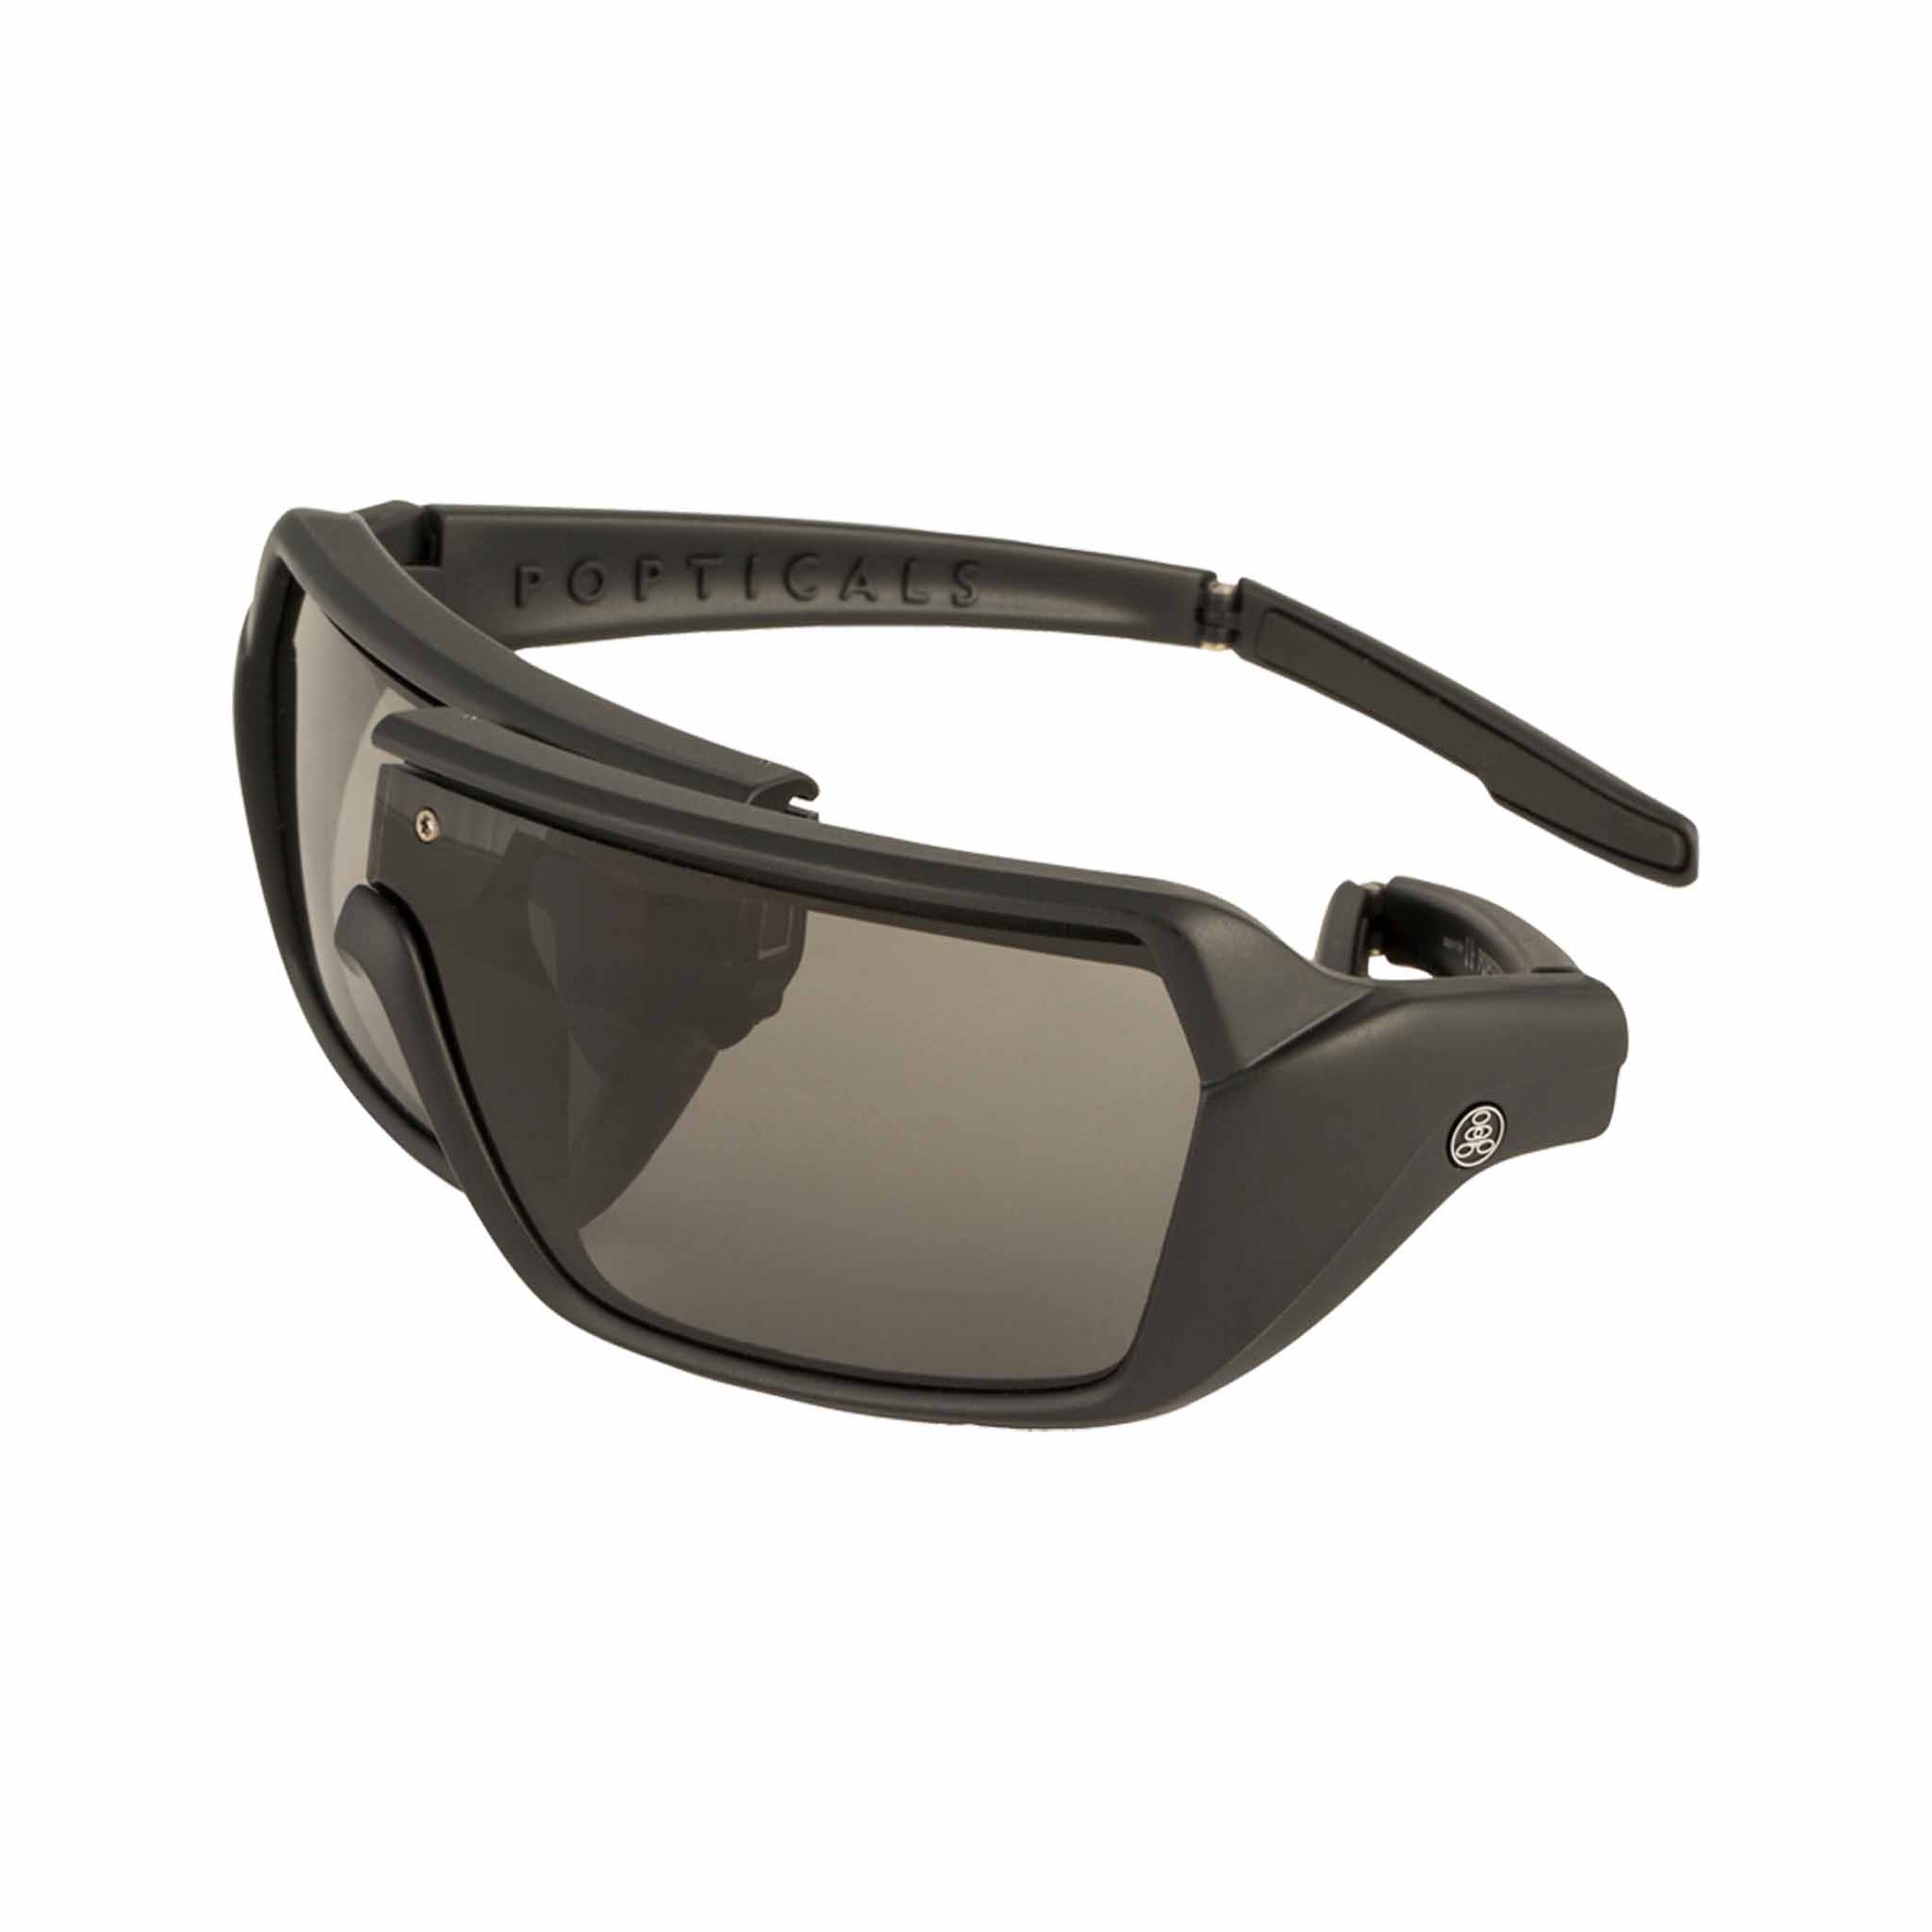 Popticals, Premium Compact Sunglasses, PopStorm, 010060-BMGP, Polarized Sunglasses, Matte Black Frame, Gray Lenses, Spider View